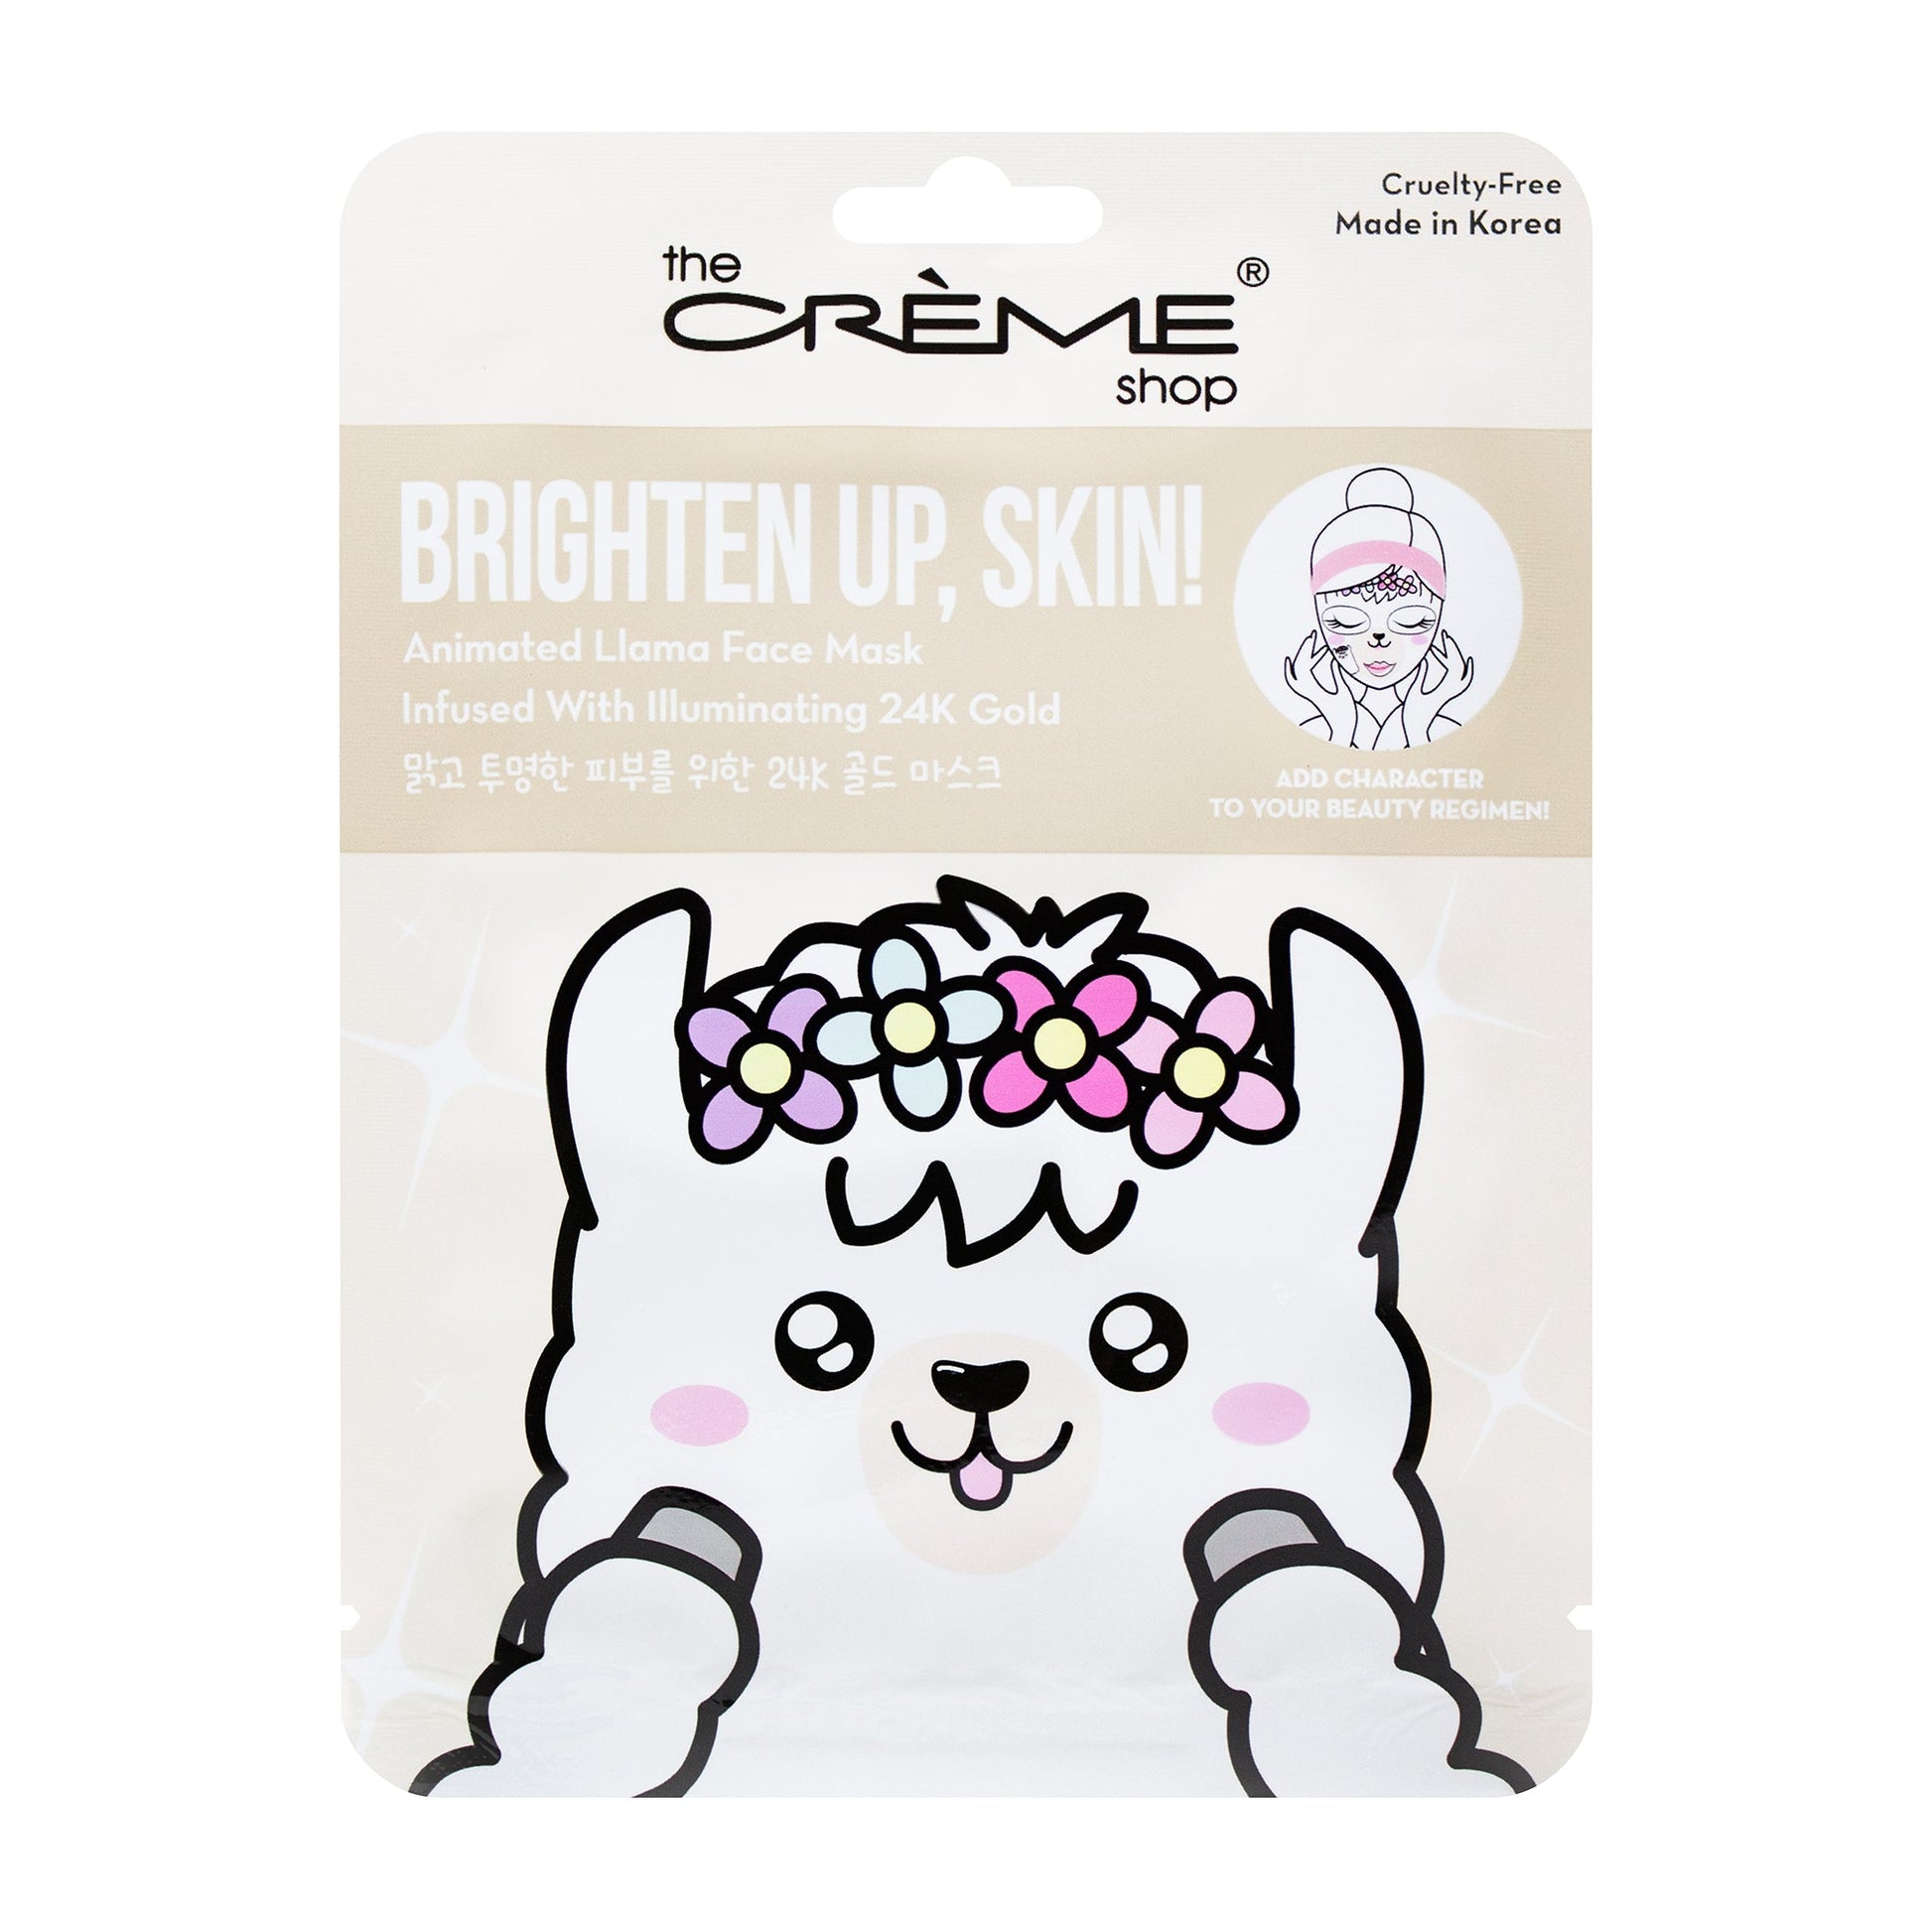 Brighten Up, Skin! Animated Llama Face Mask Animated Sheet Masks - The Crème Shop Single 